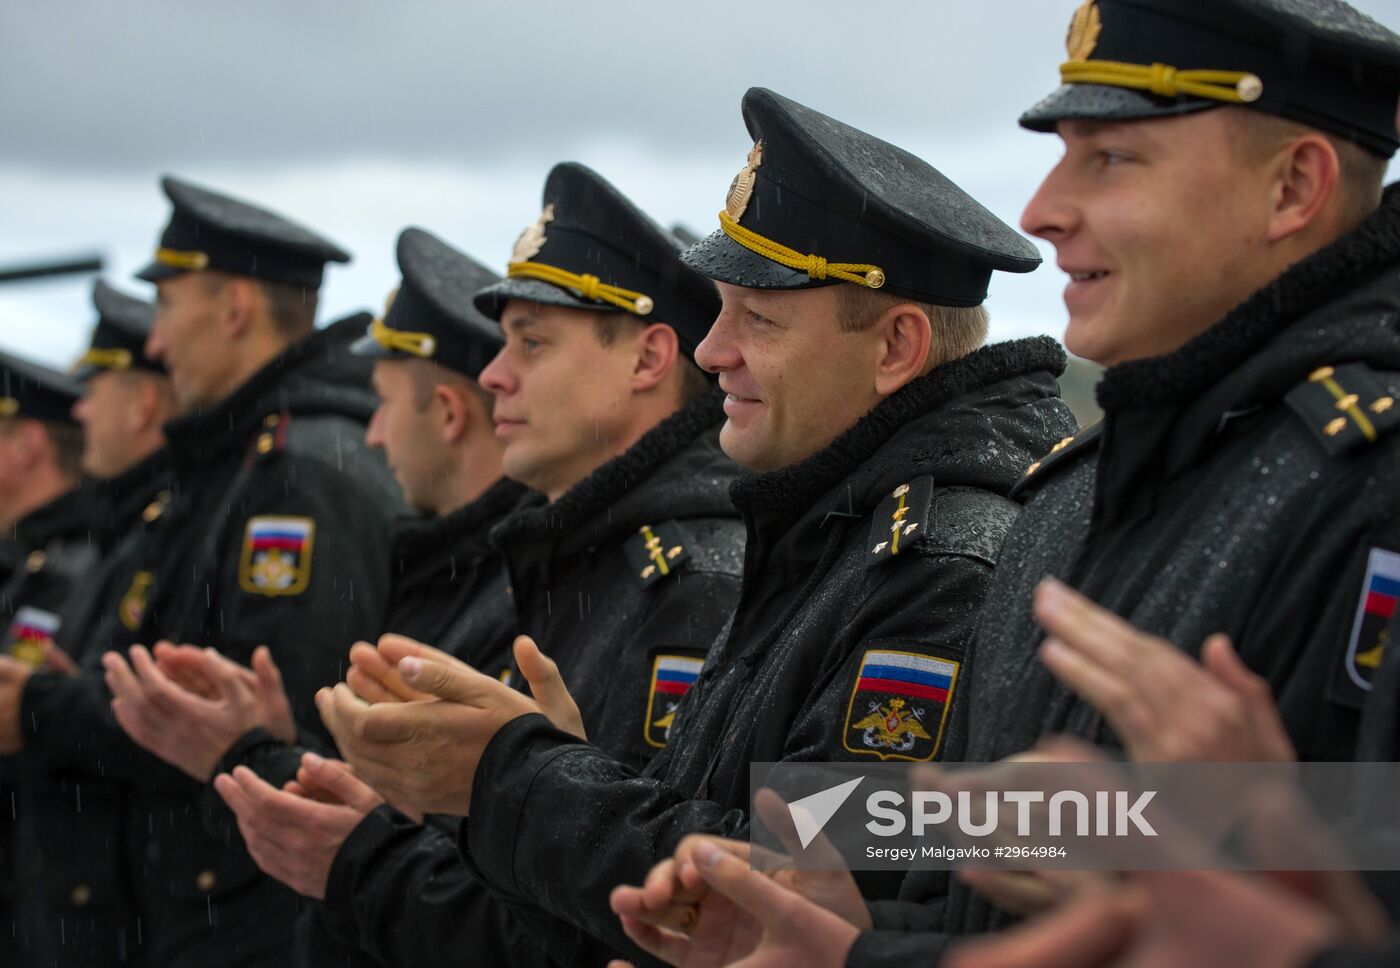 Sevastopol celebrates Russian Navy's 320th anniversary